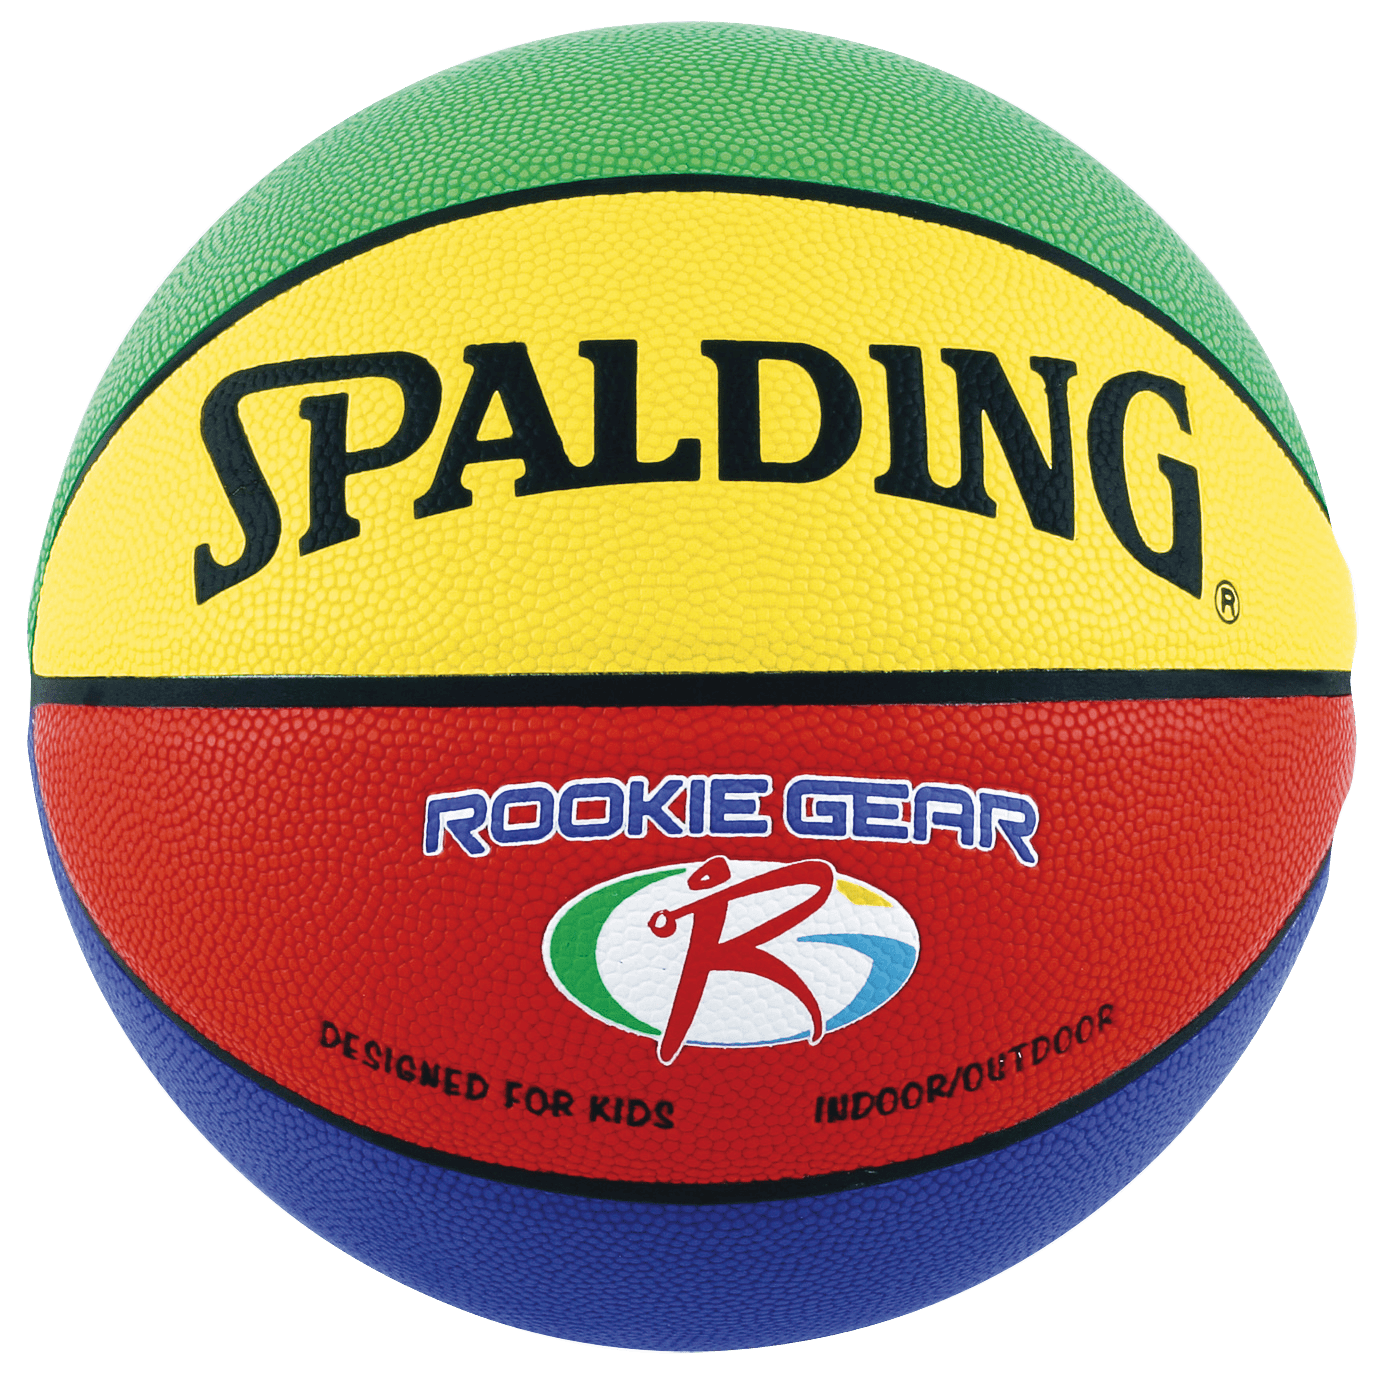 Spalding Rookie Gear Soccer Ball 